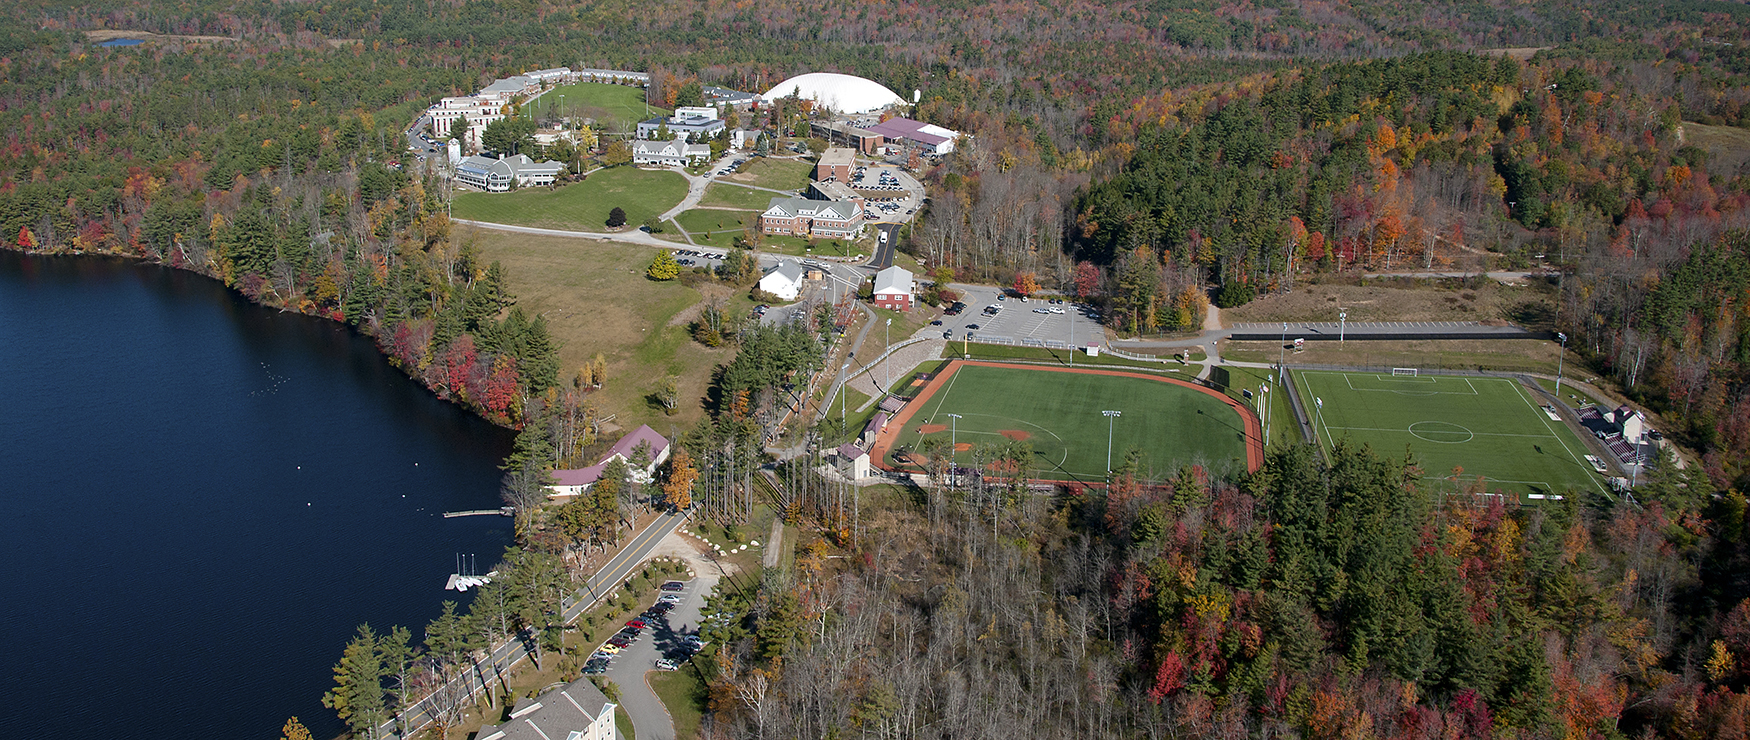 Franklin Pierce campus aerial picture